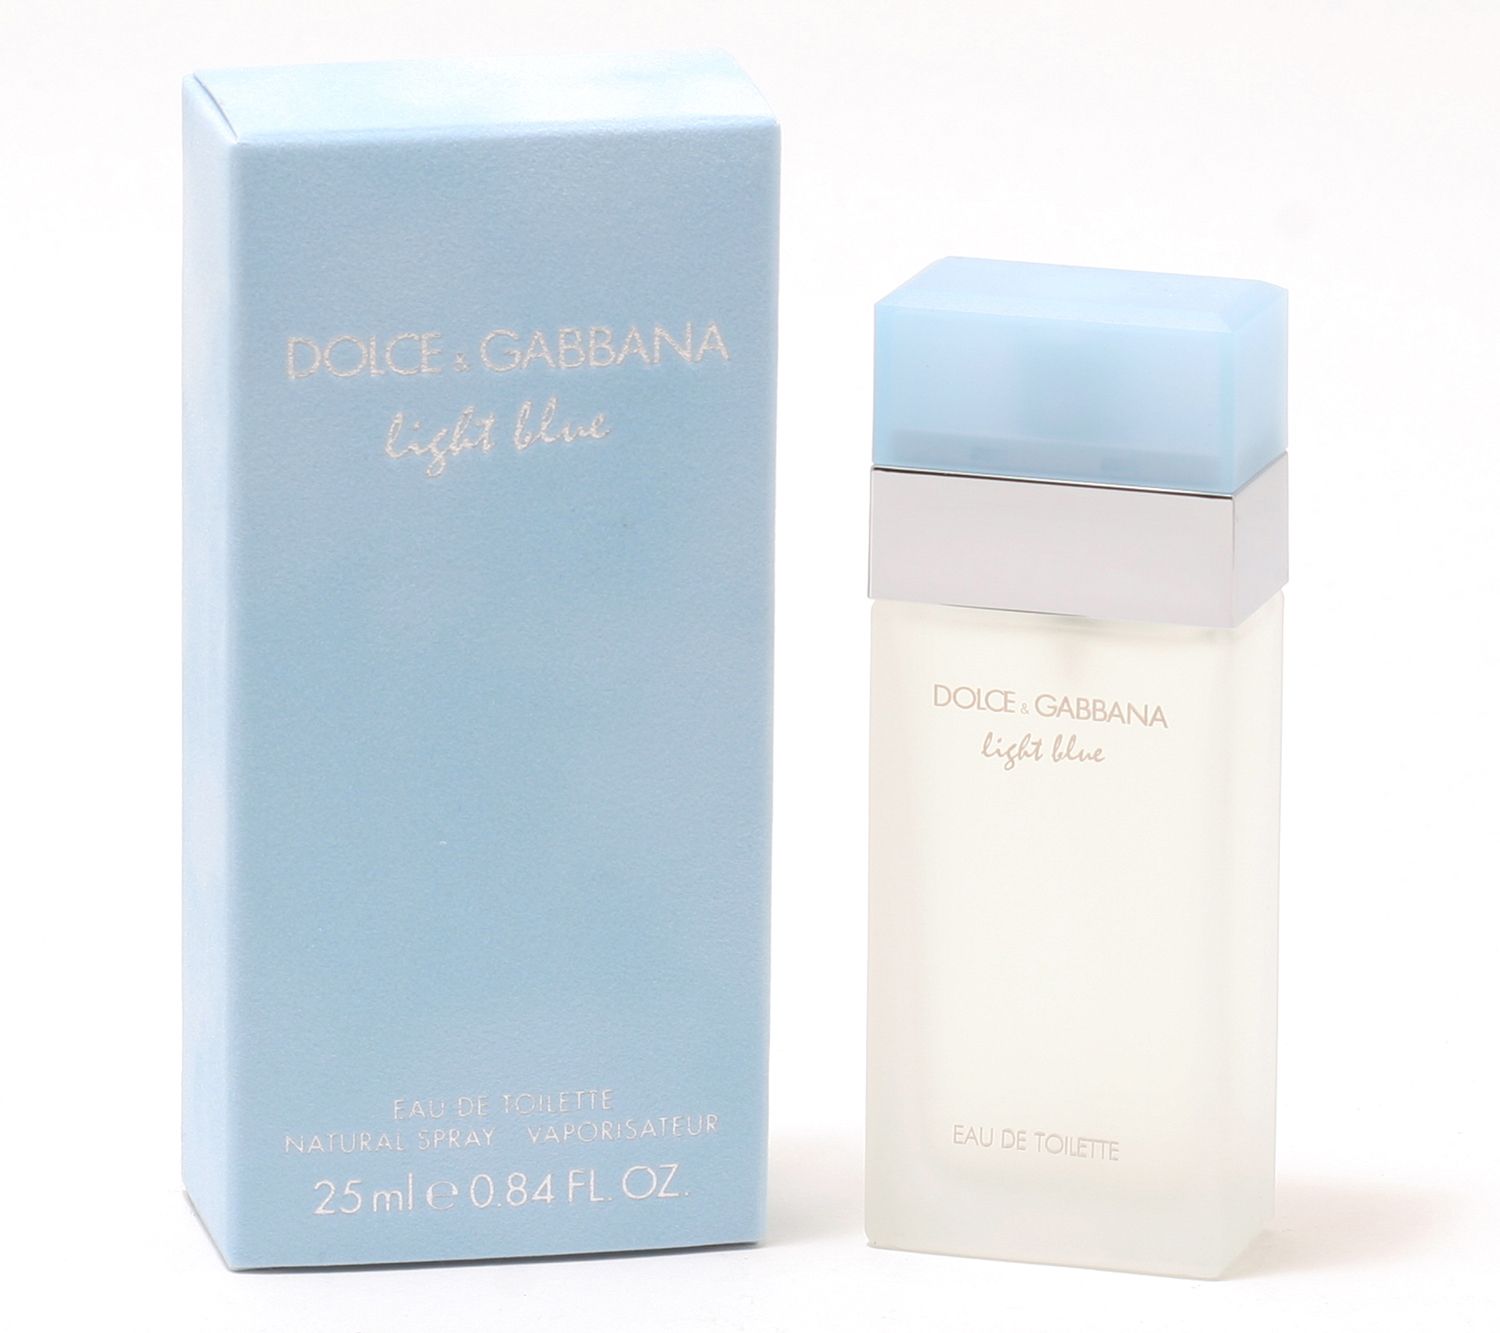 dolce gabbana light blue 0.84 oz